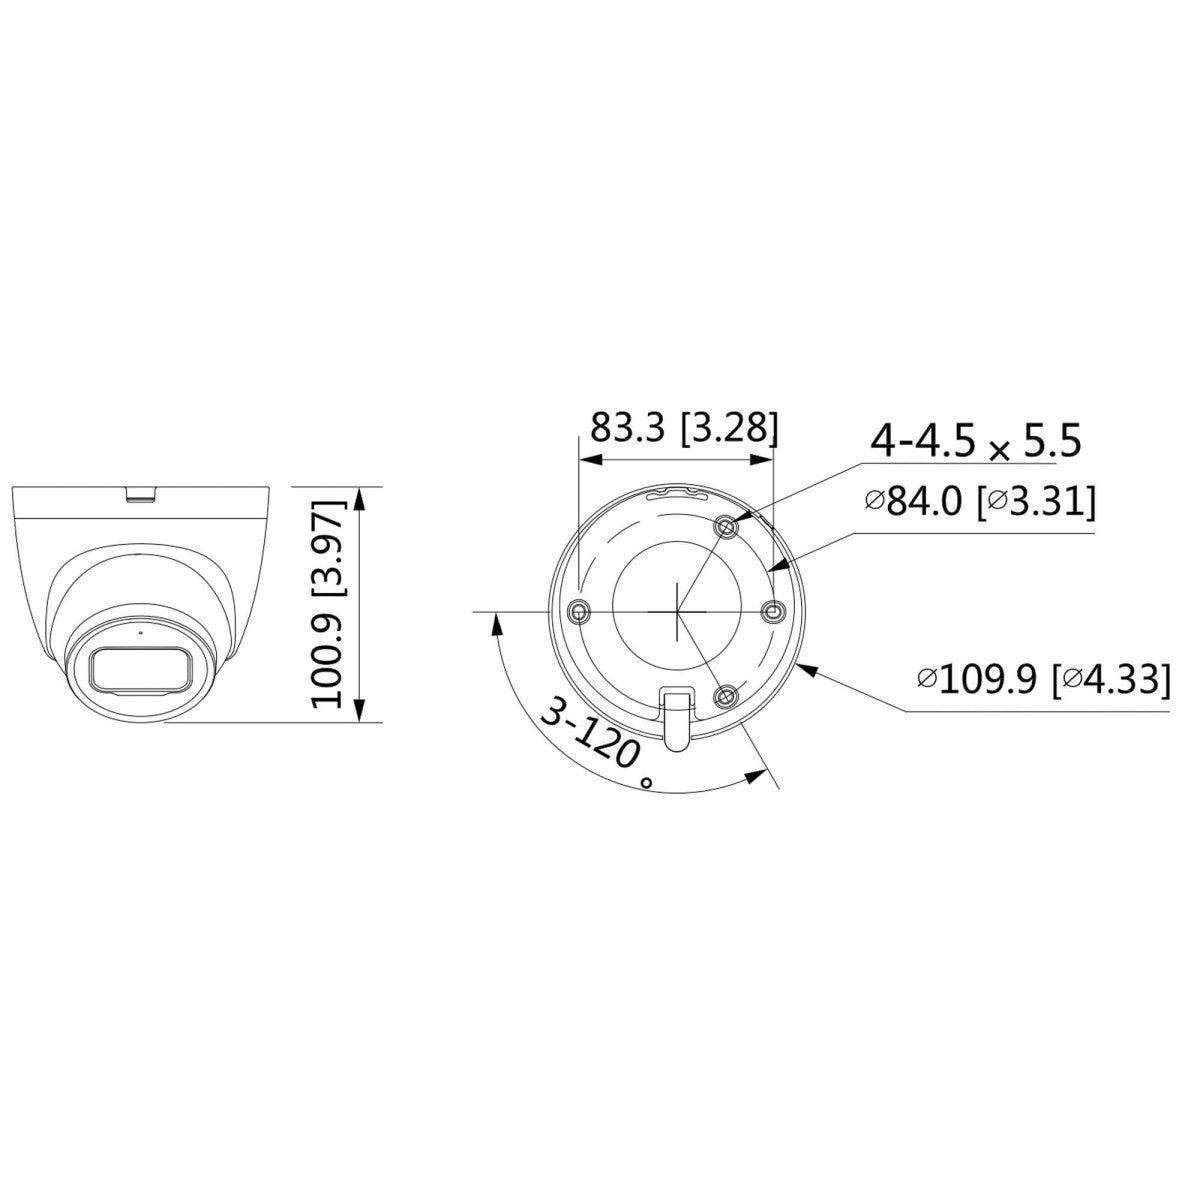 GOLIATH Starlight IP Dome Kamera | 4 MP | 2.8mm | WDR | 30m IR | IVS | Mikrofon | PoE | SMART Serie